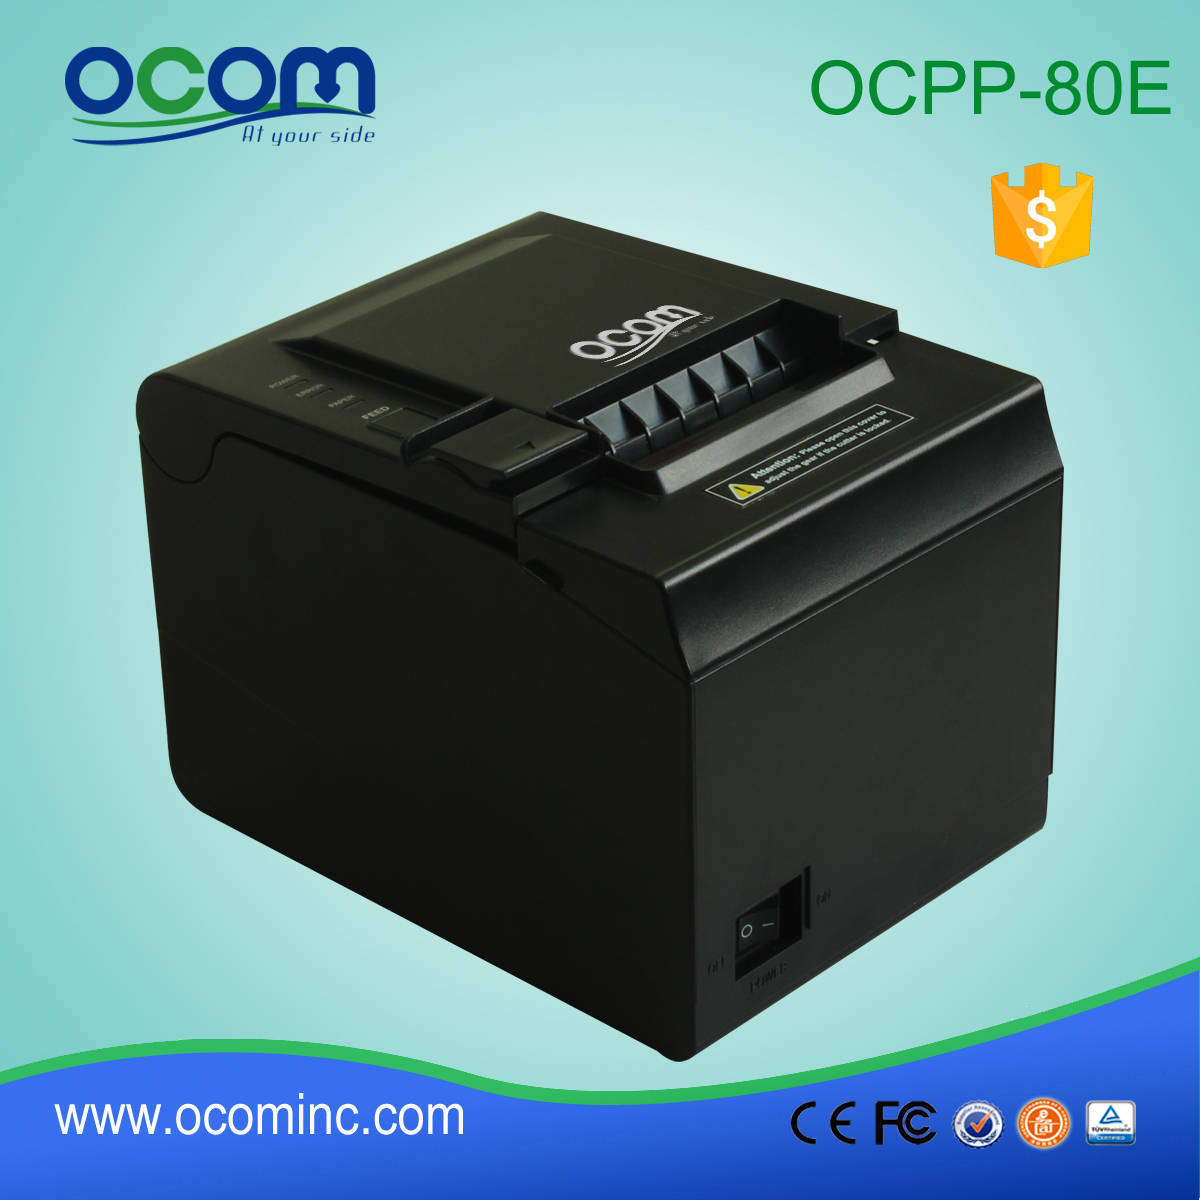 OCPP-80E Cina Factory USB seriale LAN POS stampante termica ricevuta